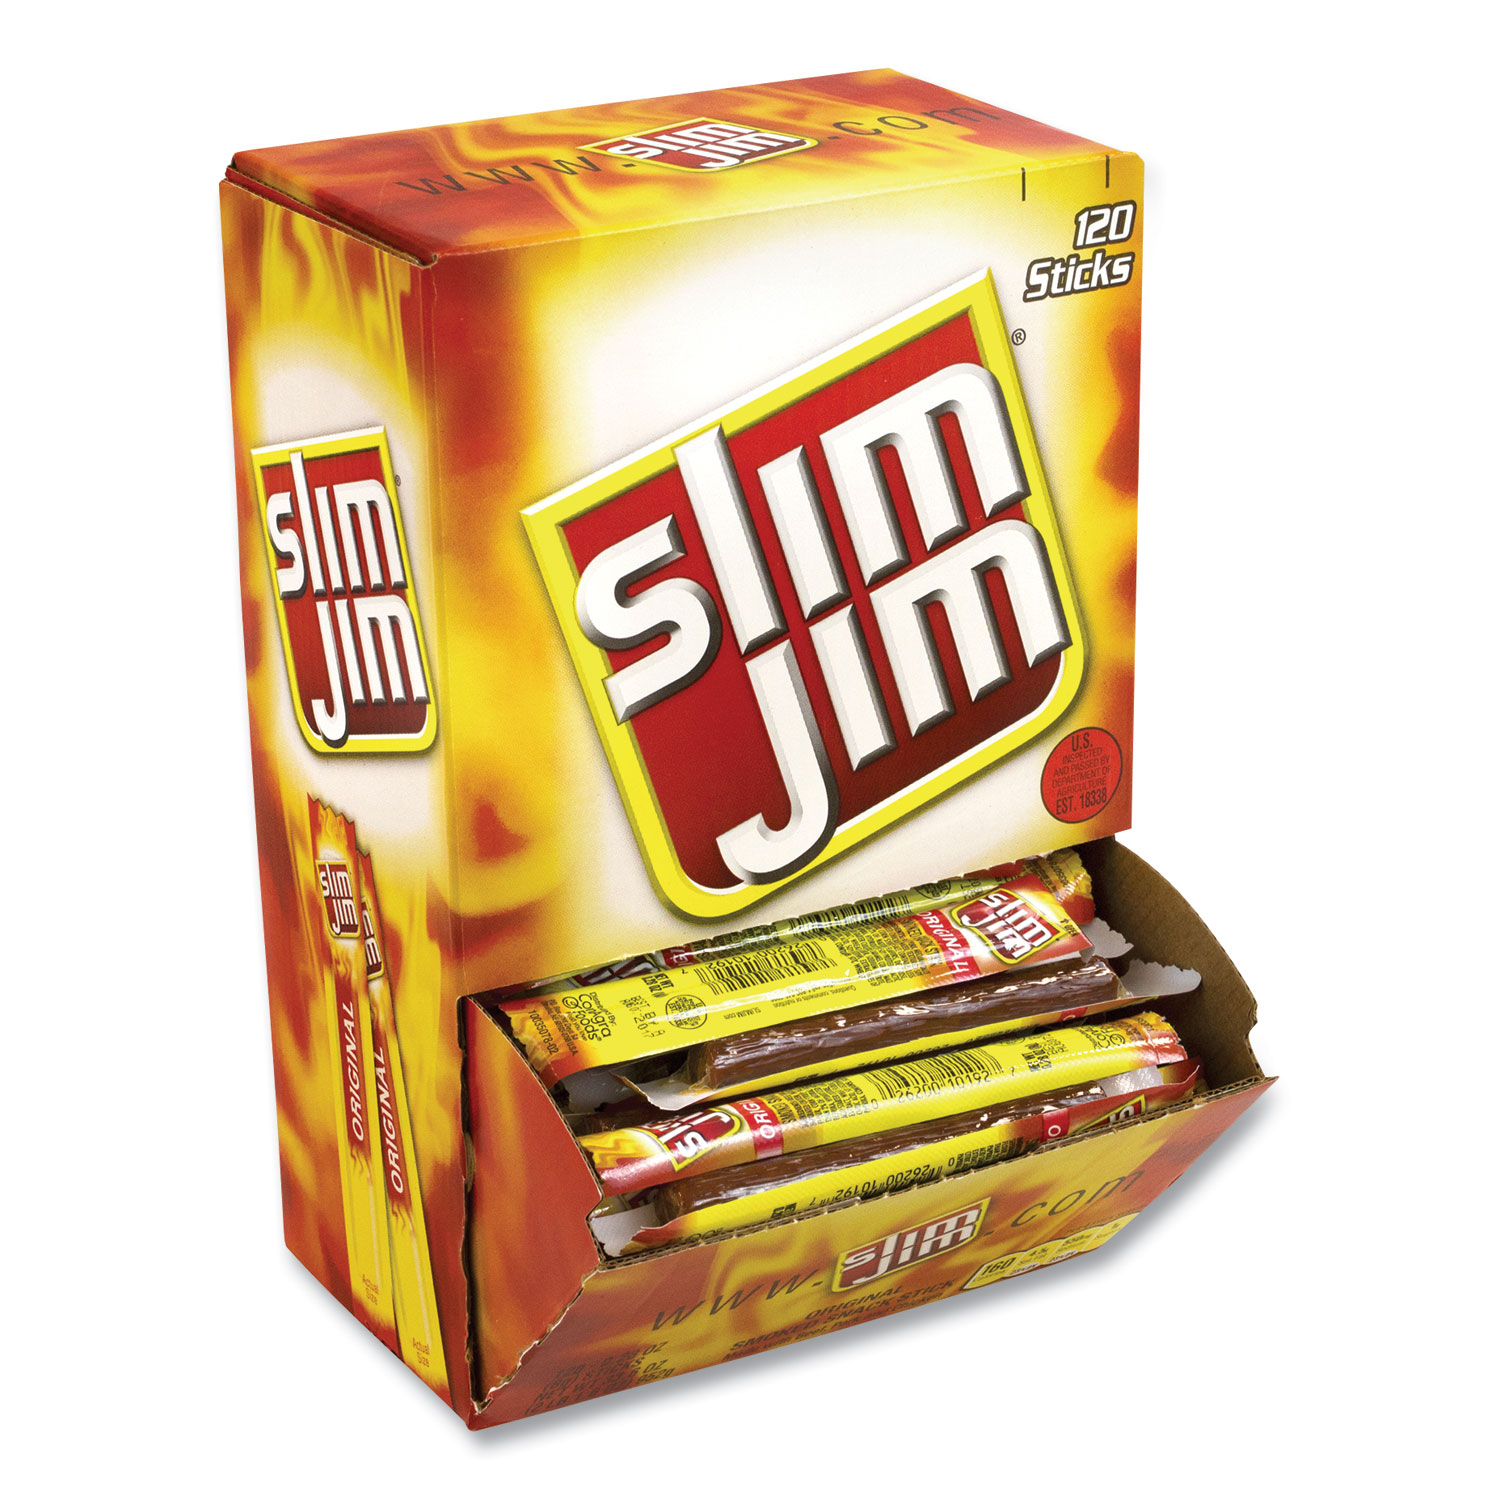  Slim Jim 36215 Beef Jerky Meat Sticks Original, 0.28 oz Stick, 120 Sticks/Box, Free Delivery in 1-4 Business Days (GRR22000065) 